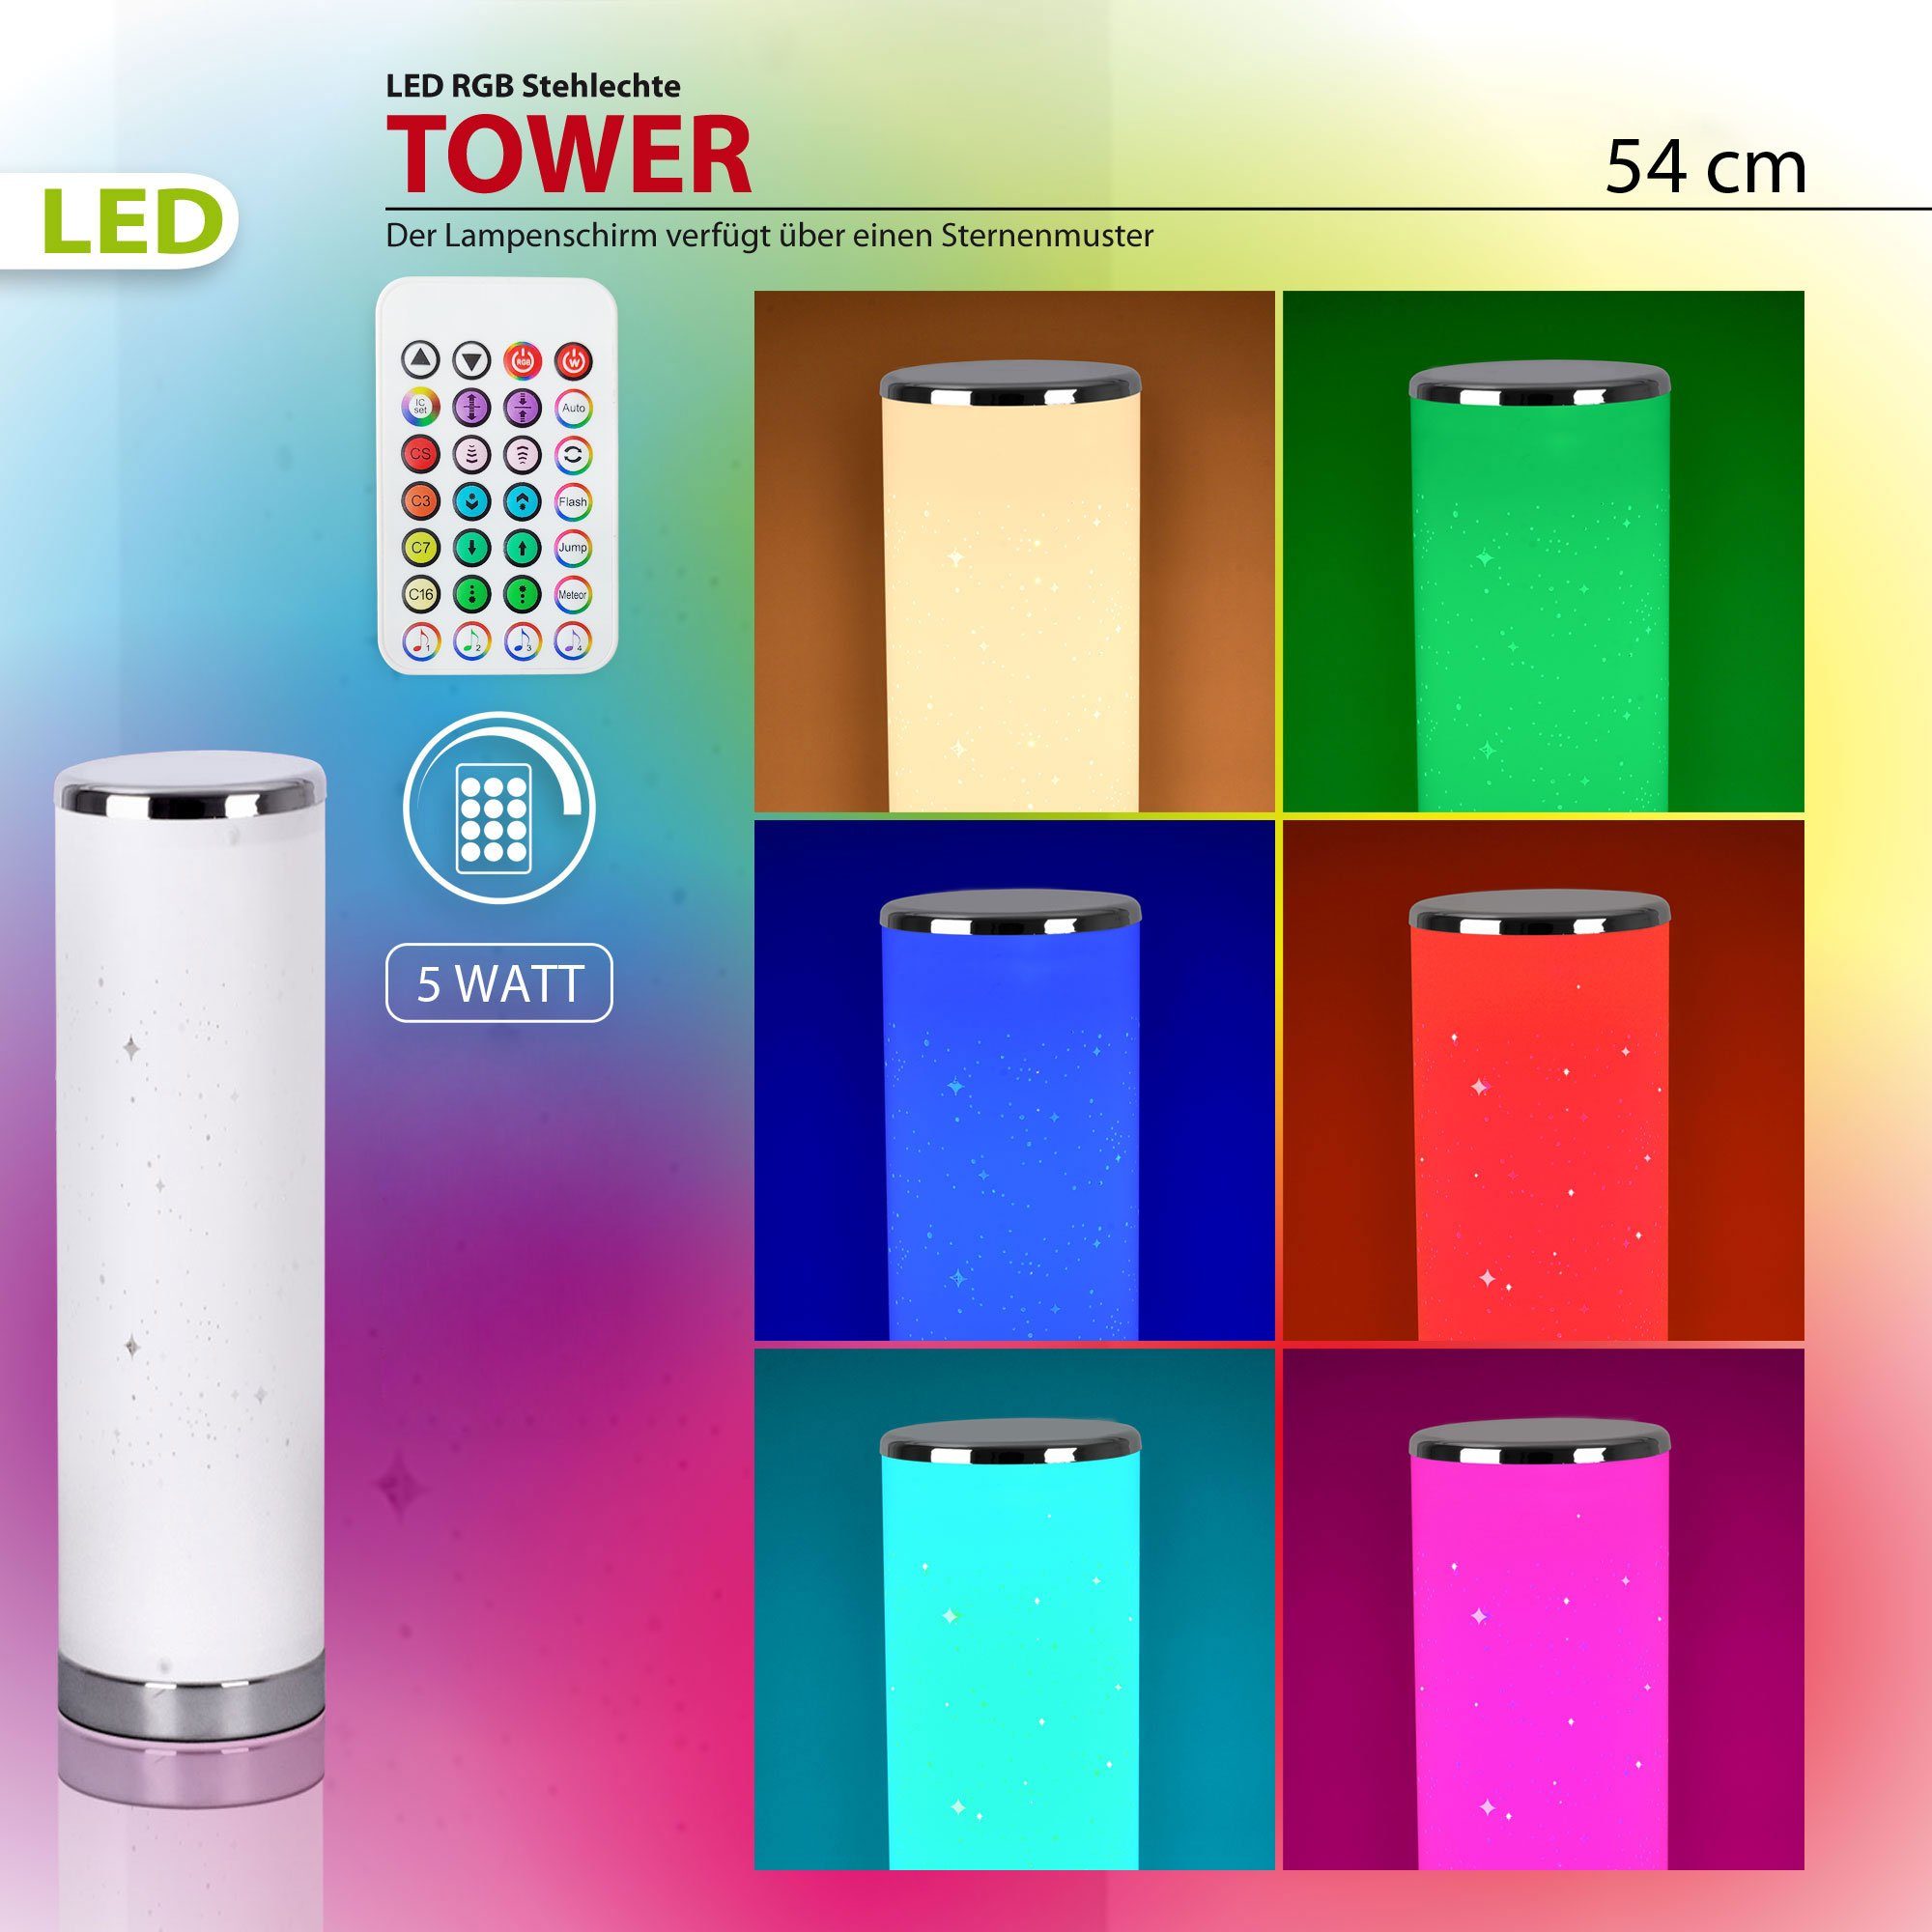 Maxkomfort LED Stehlampe »Tower-X«, Stehleuchte, Eckleuchte, Corner, RGB,  Dimmbar, Music Sync, DIY, LED, Lichtsäule, Farbwechsel, Farbig,  Fernbedienung